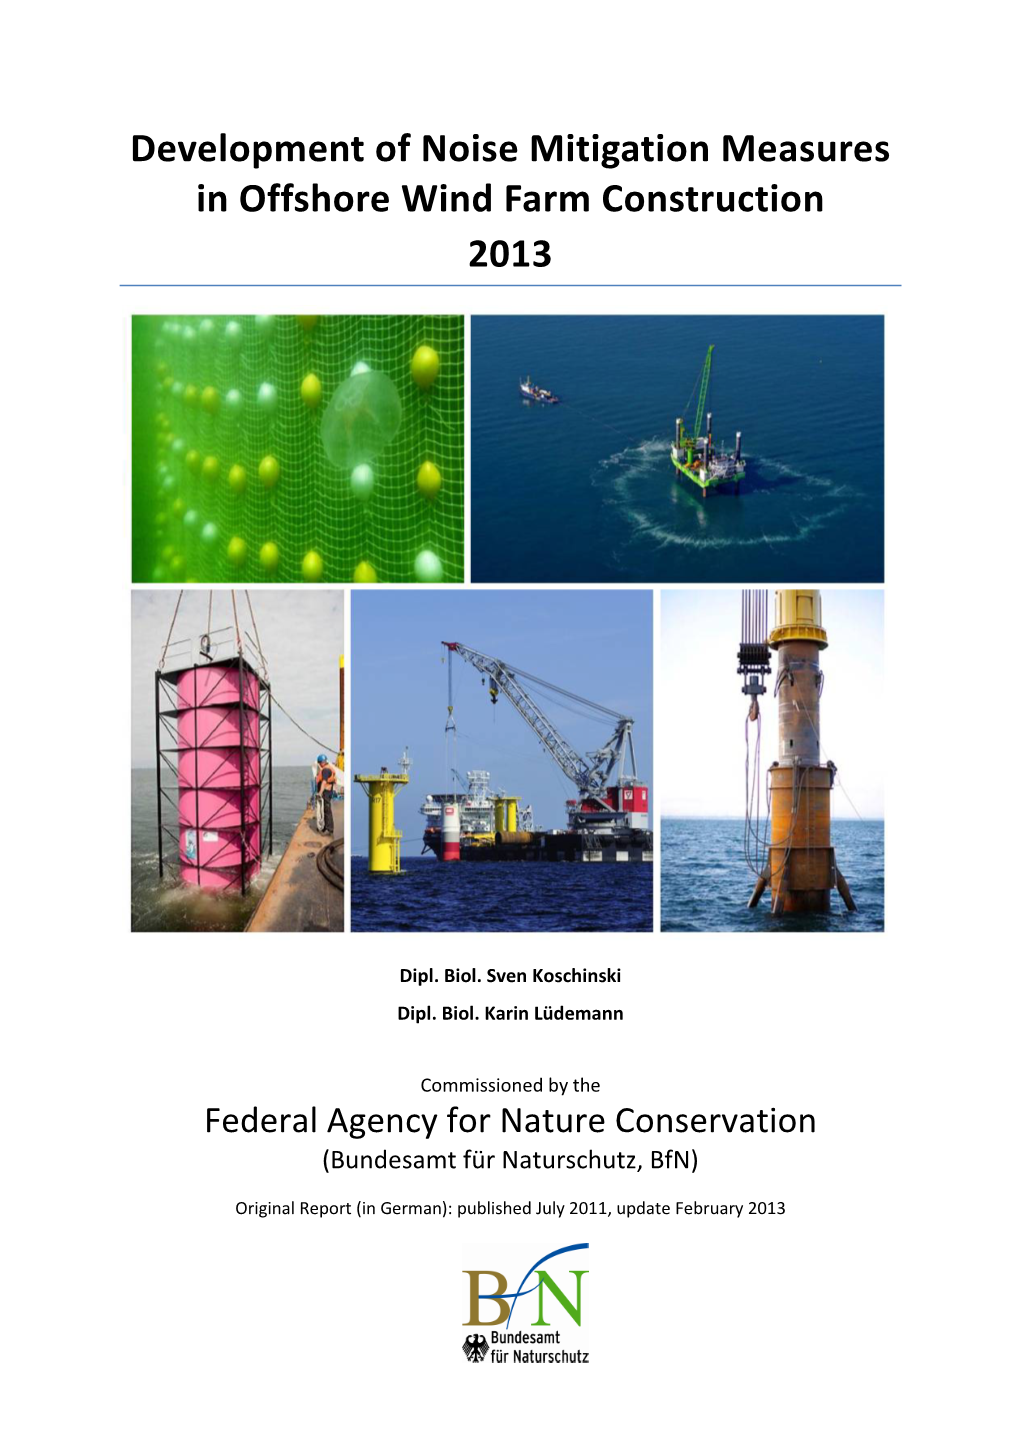 Development of Noise Mitigation Measures in Offshore Wind Farm Construction 2013